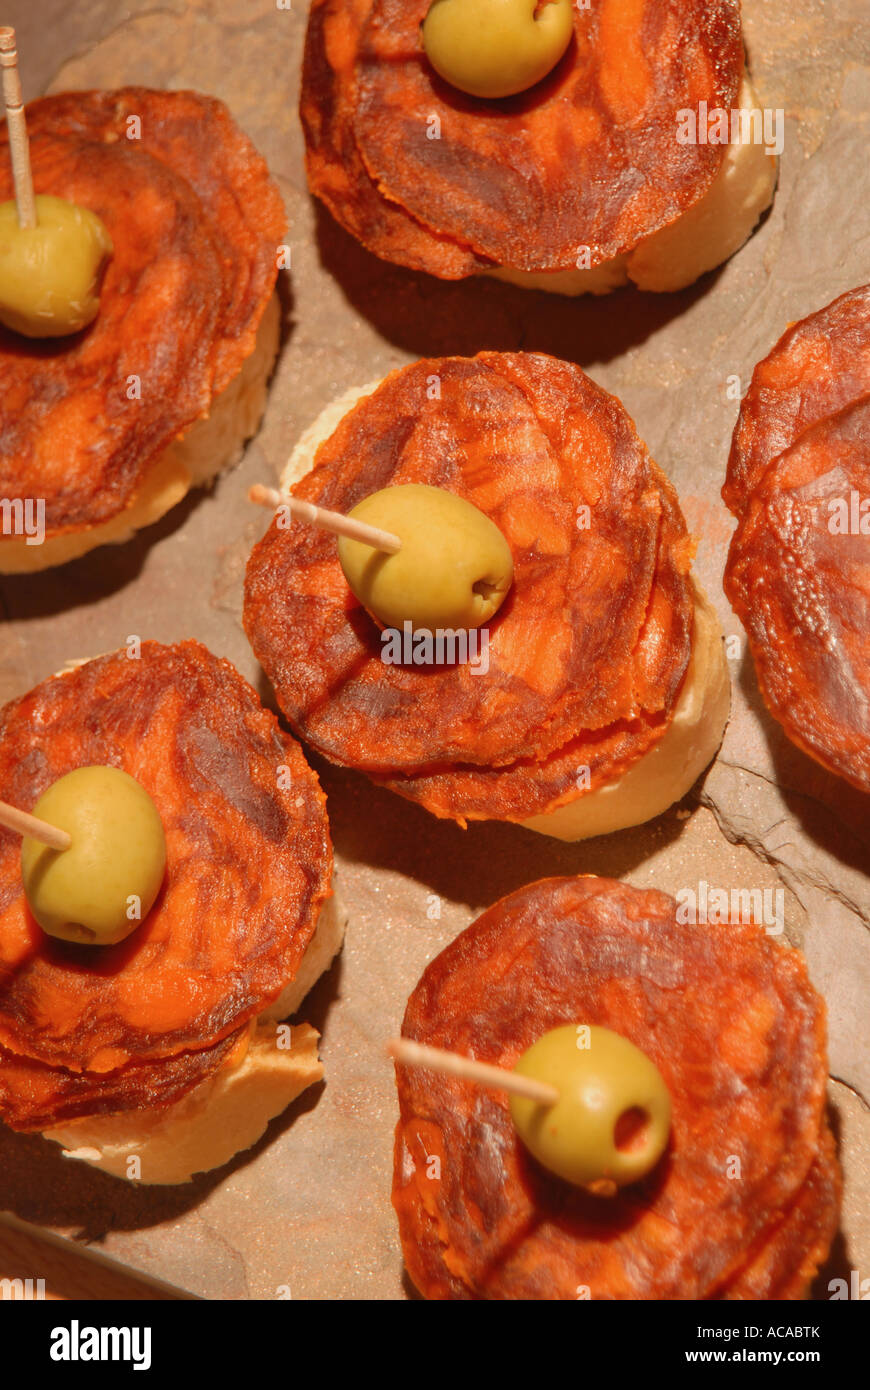 SPAIN. Tapa of chorizo Iberico de Bellota and stuffed olives on bread Stock Photo